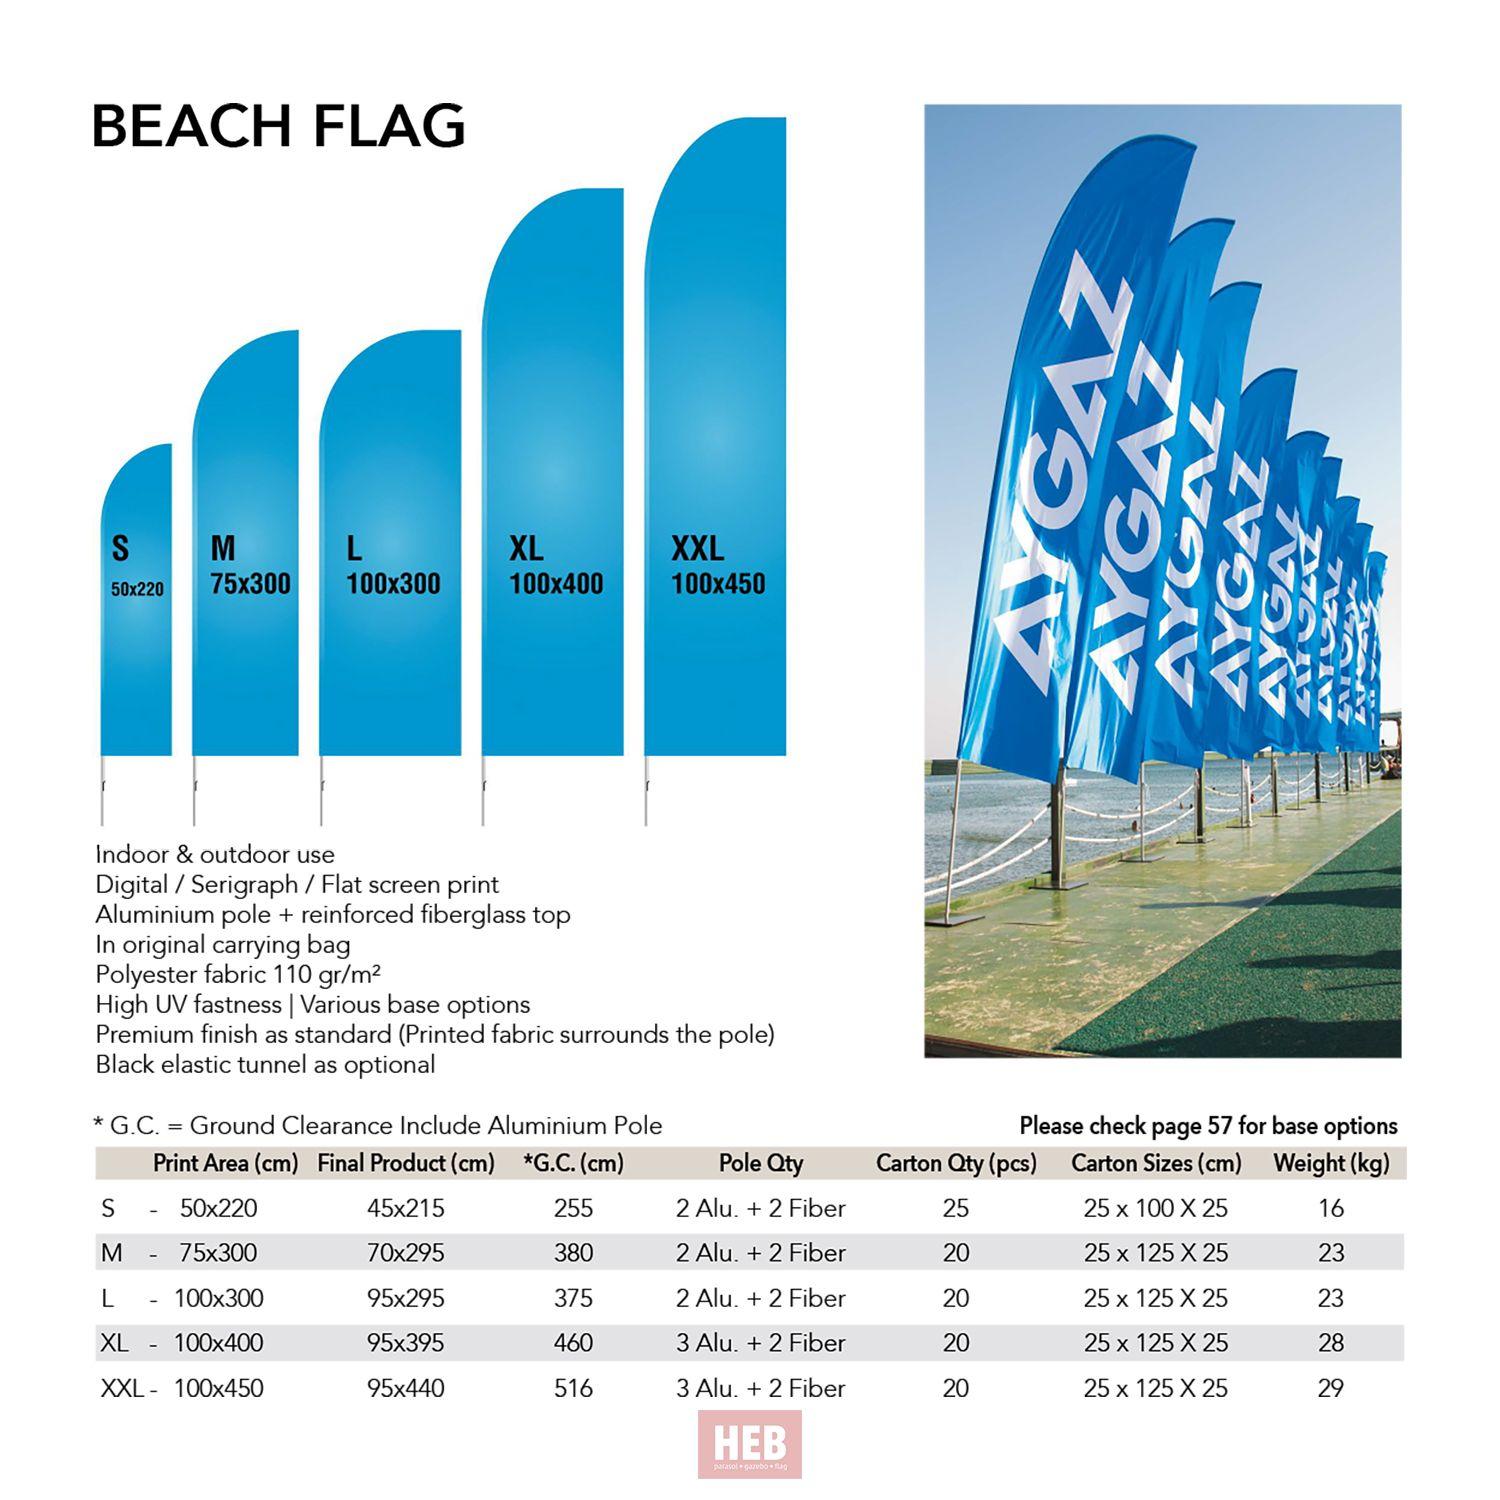 Beach Flag